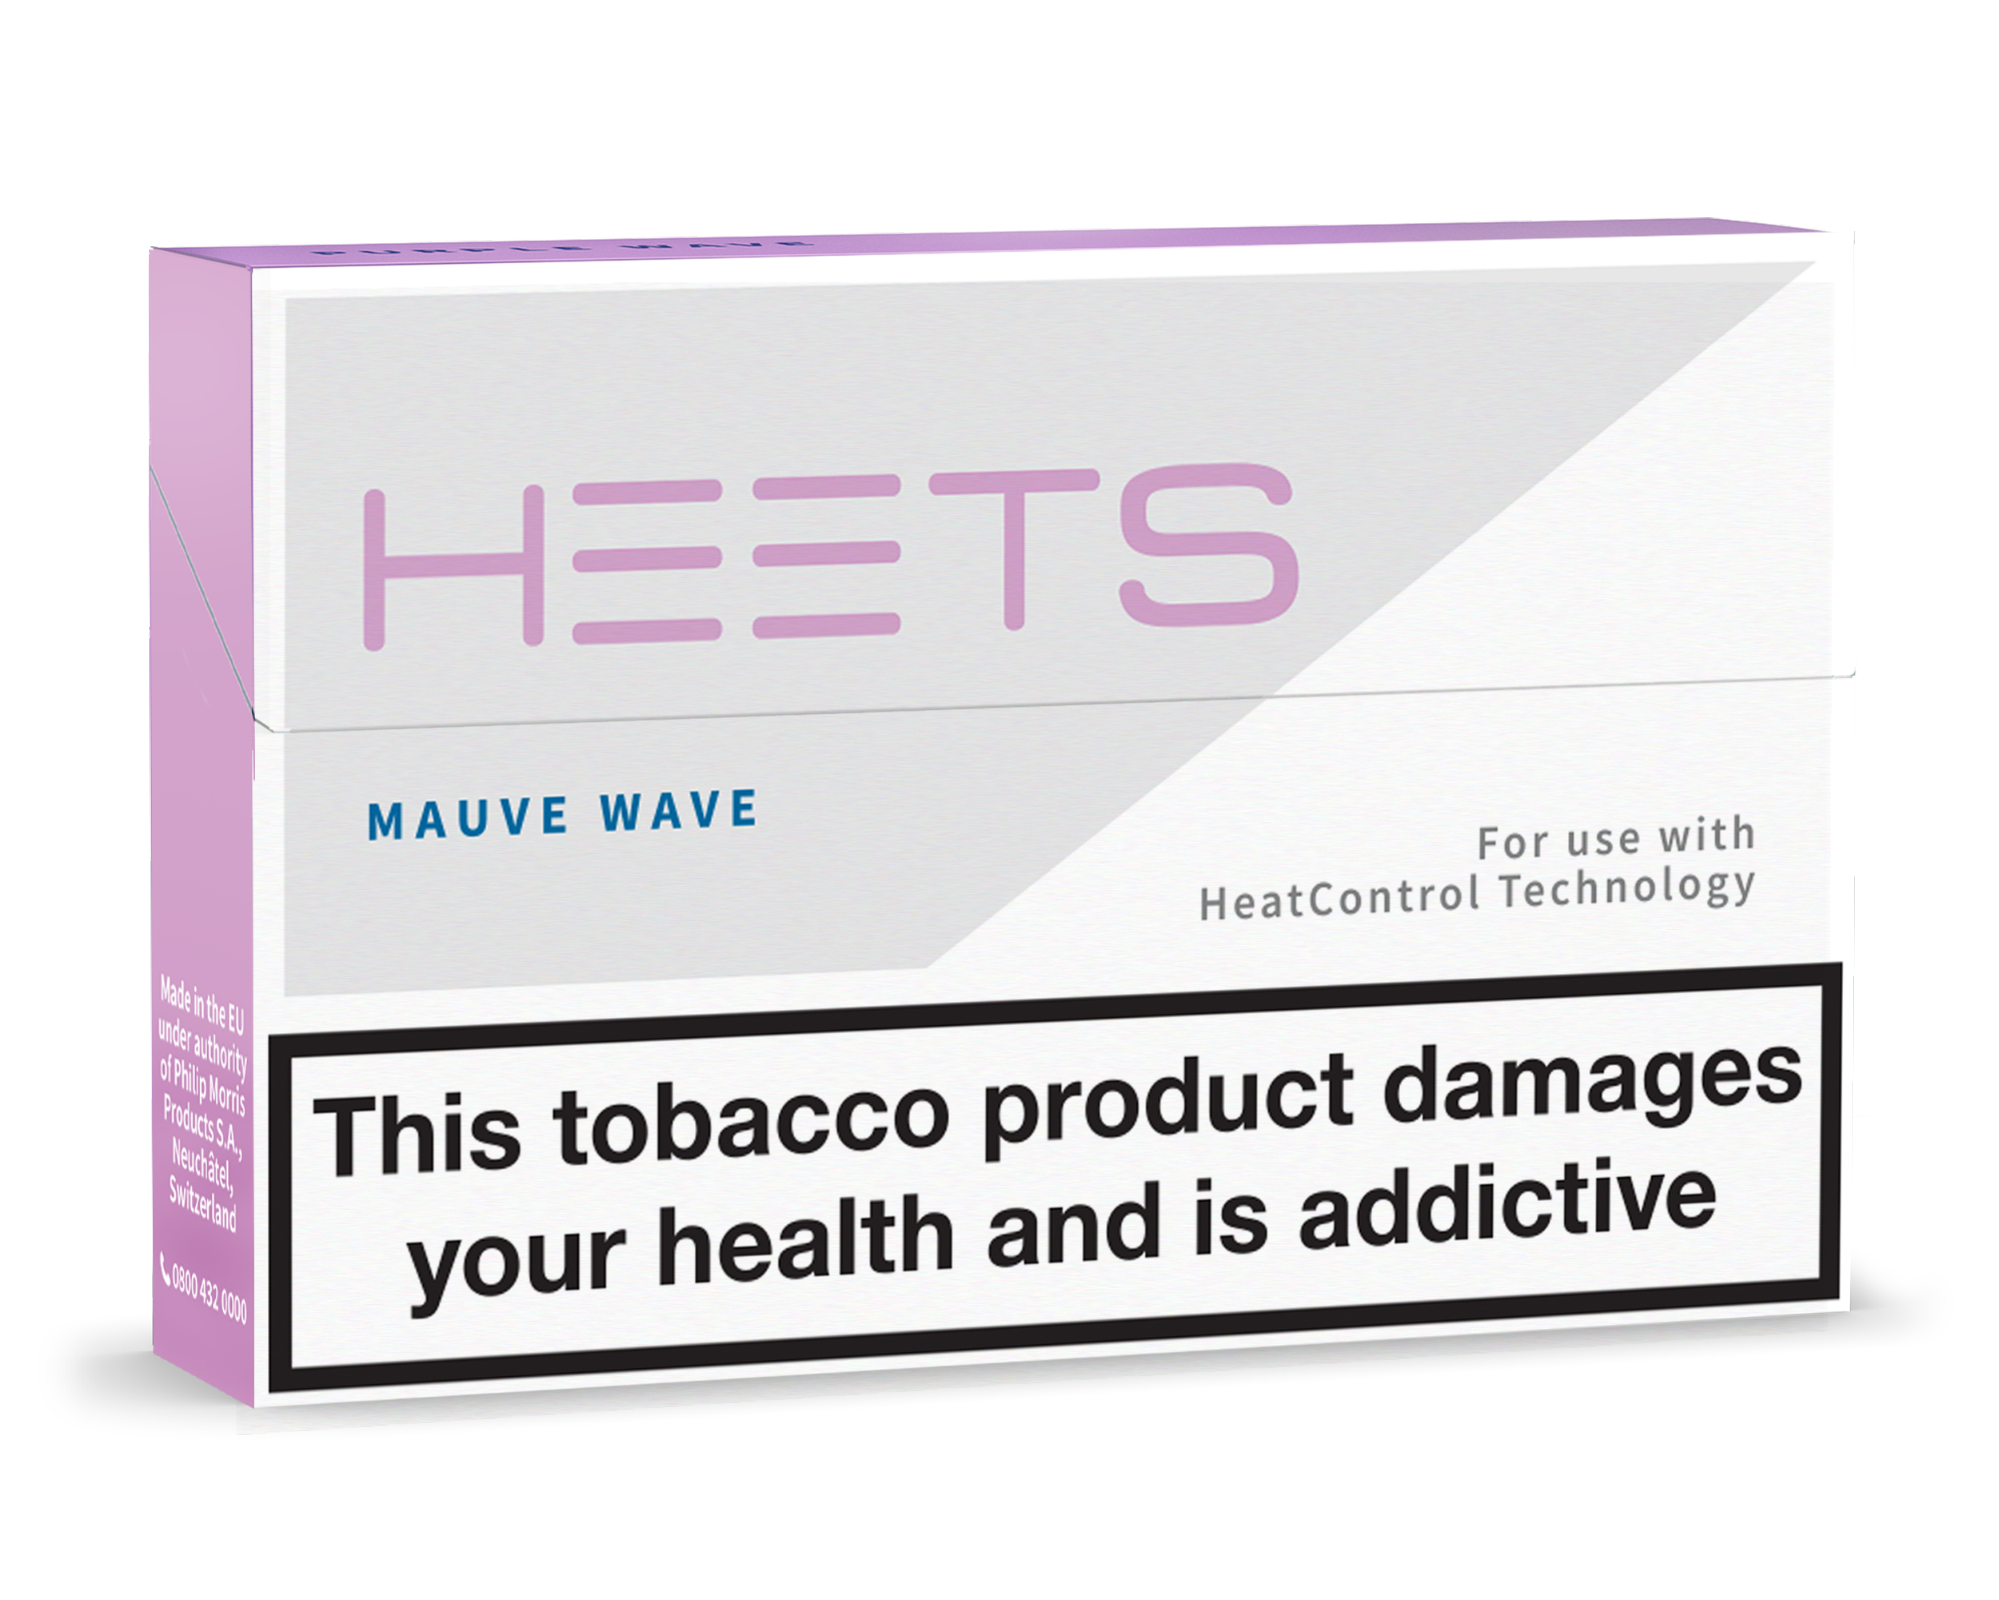 IQOS HEETS Mauve Selection Tobacco Sticks